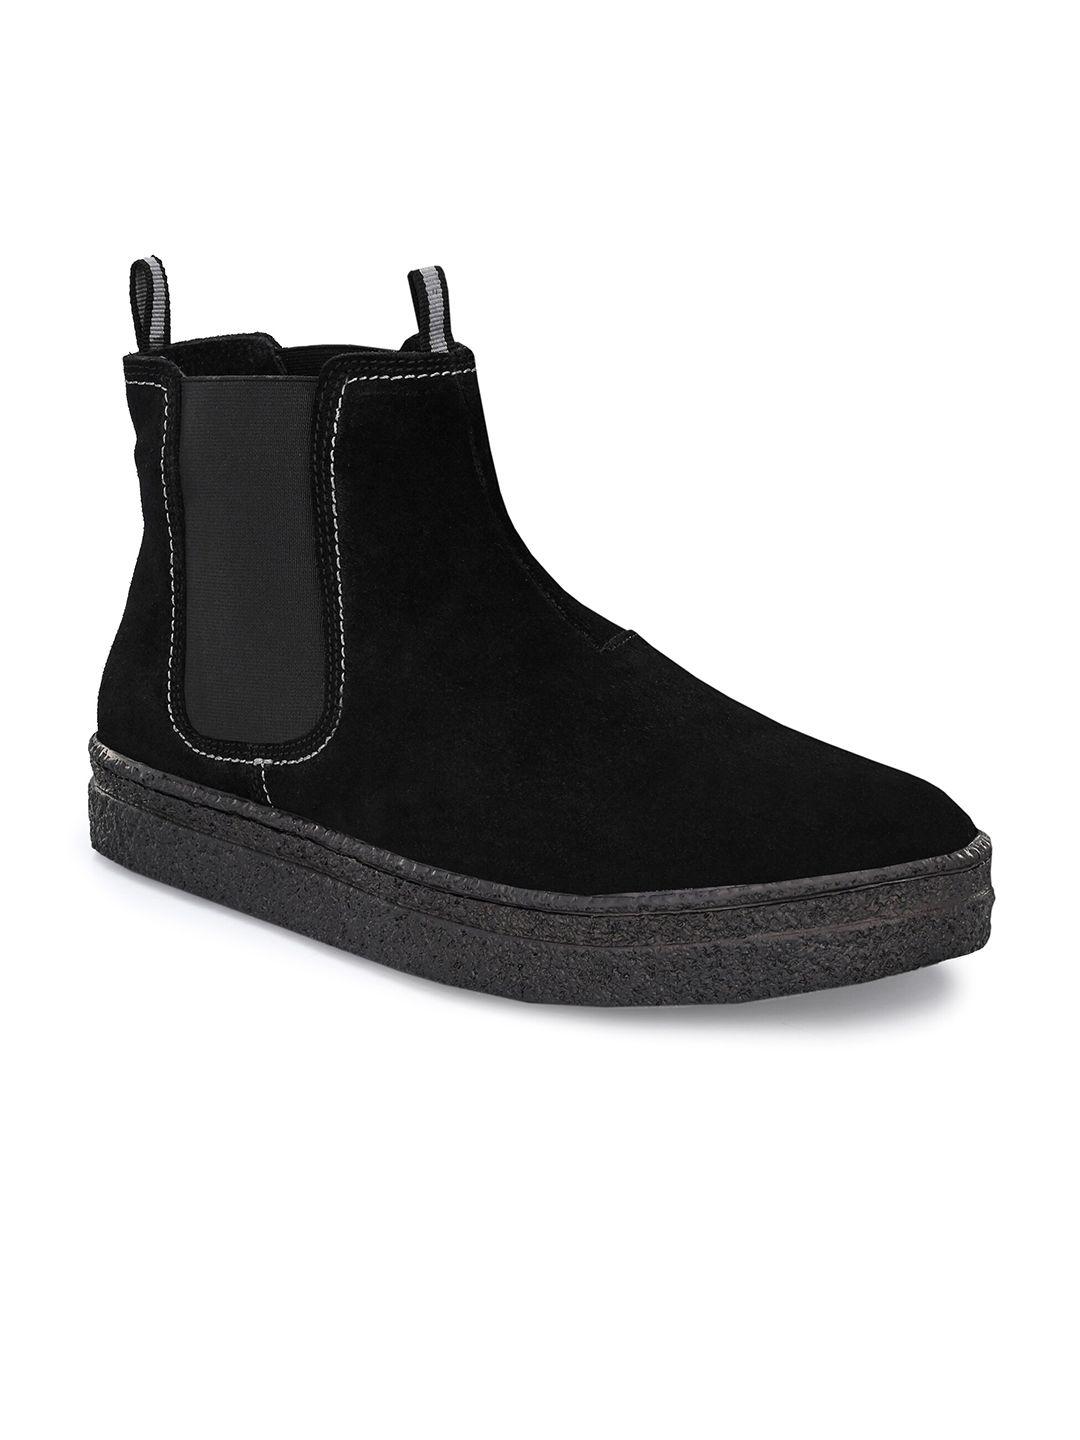 carlo romano men black leather flat boots